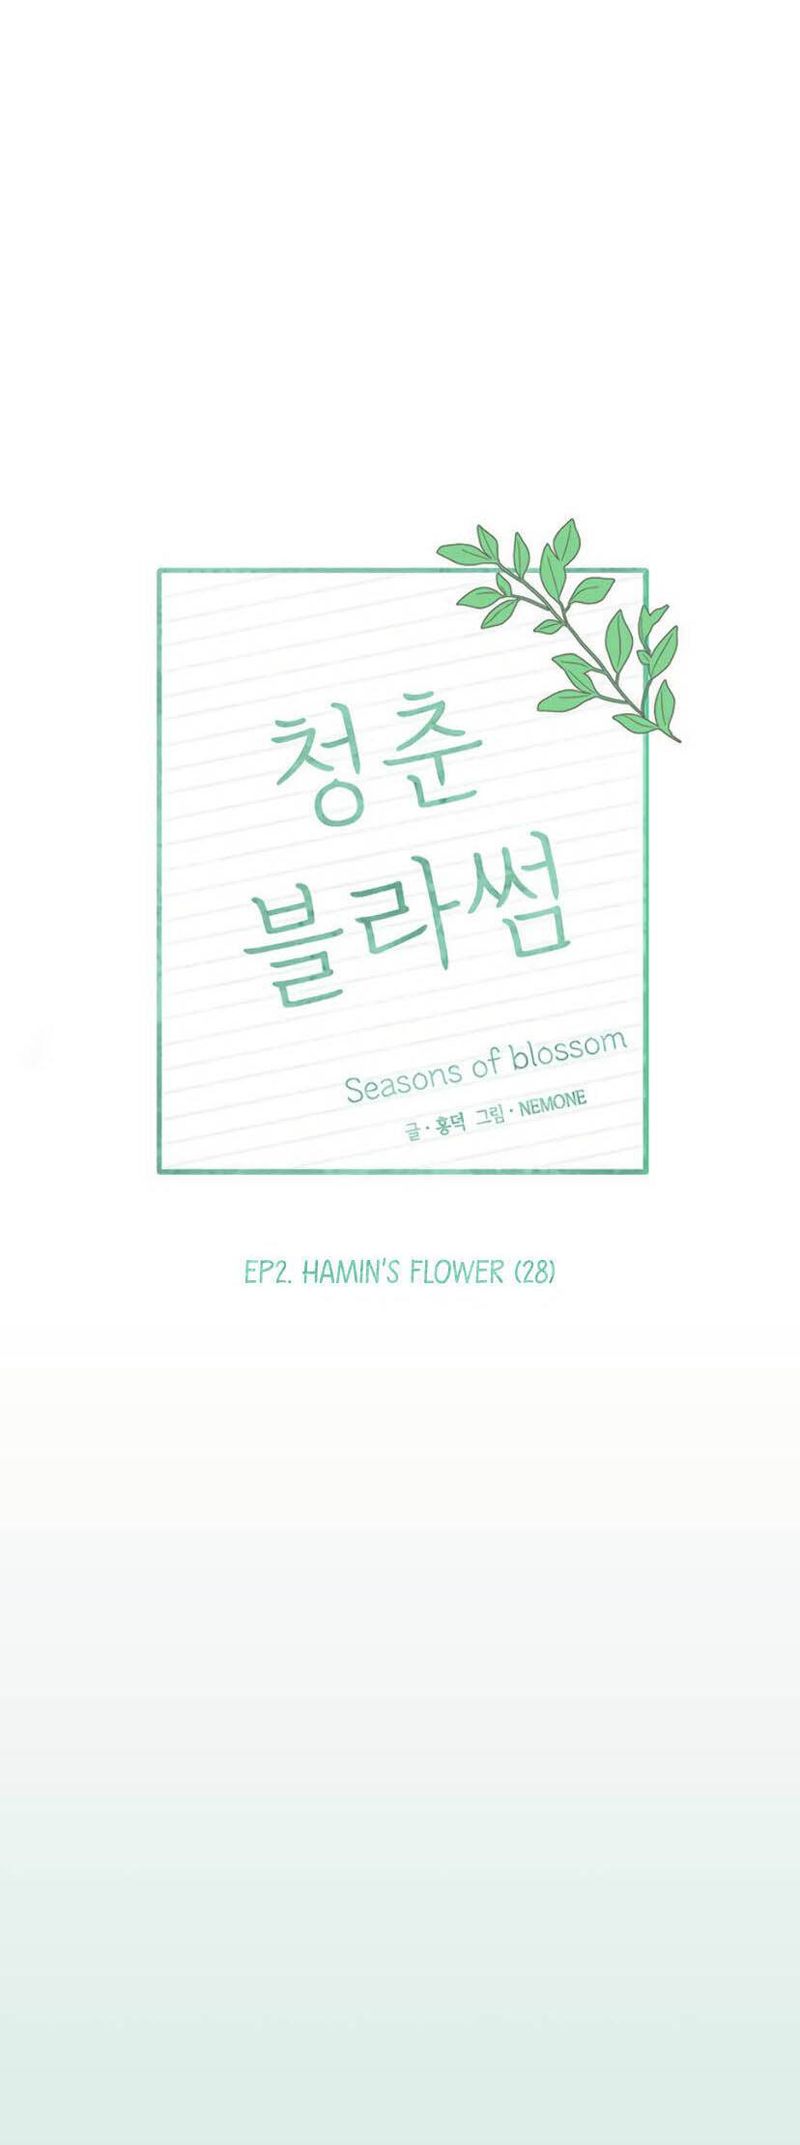 Seasons Of Blossom 58 1